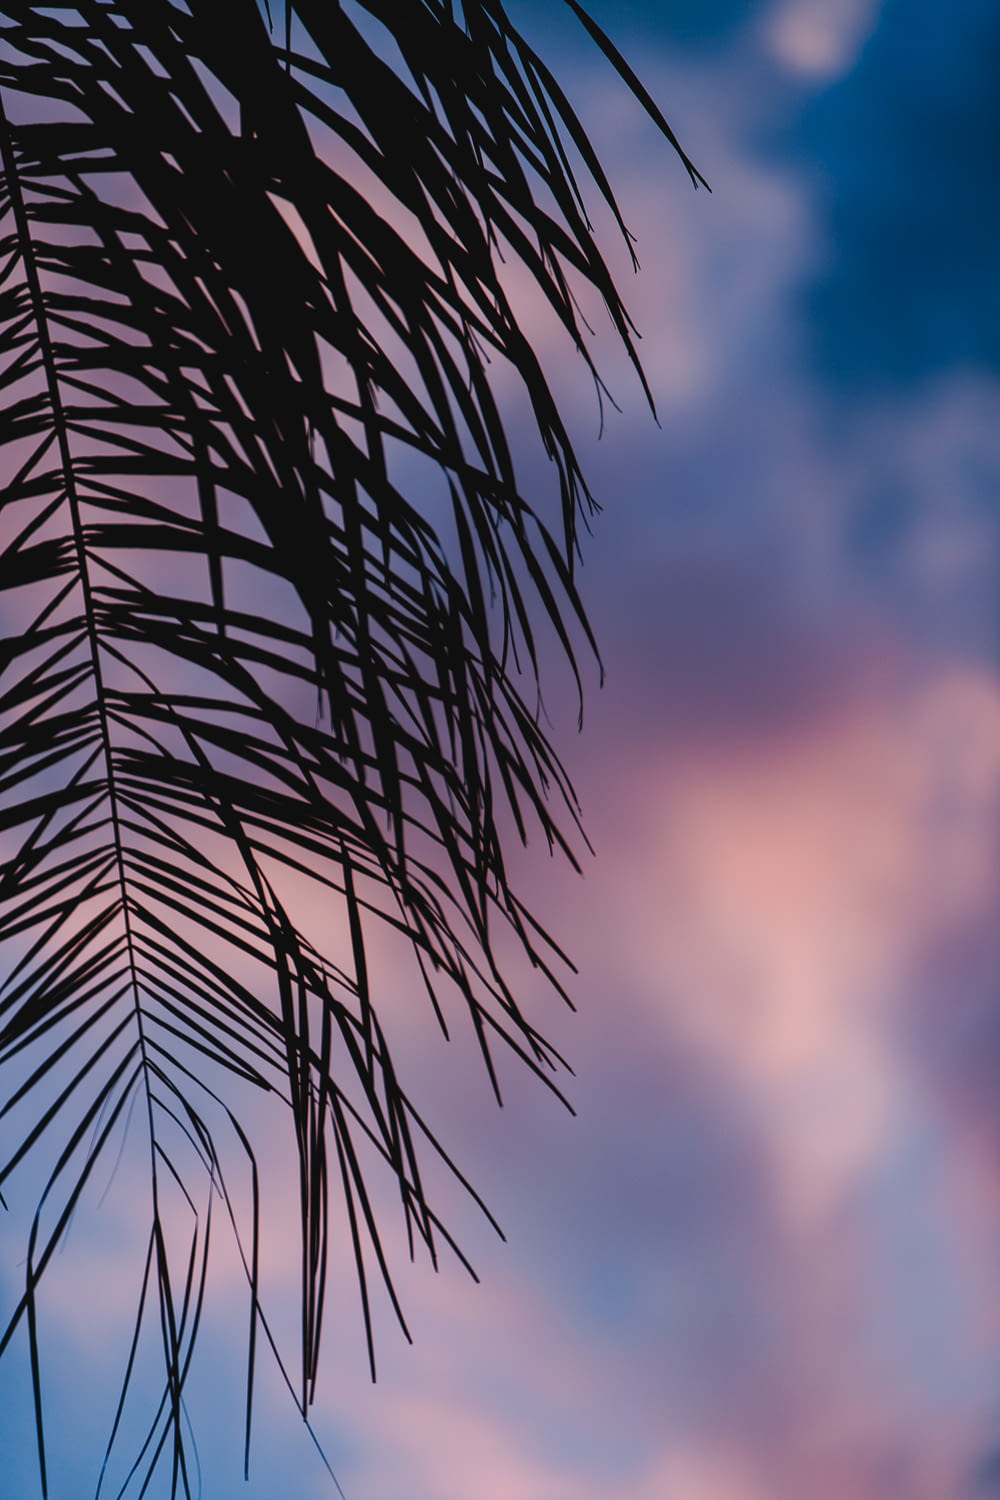 a close up of a palm leaf against a cloudy sky